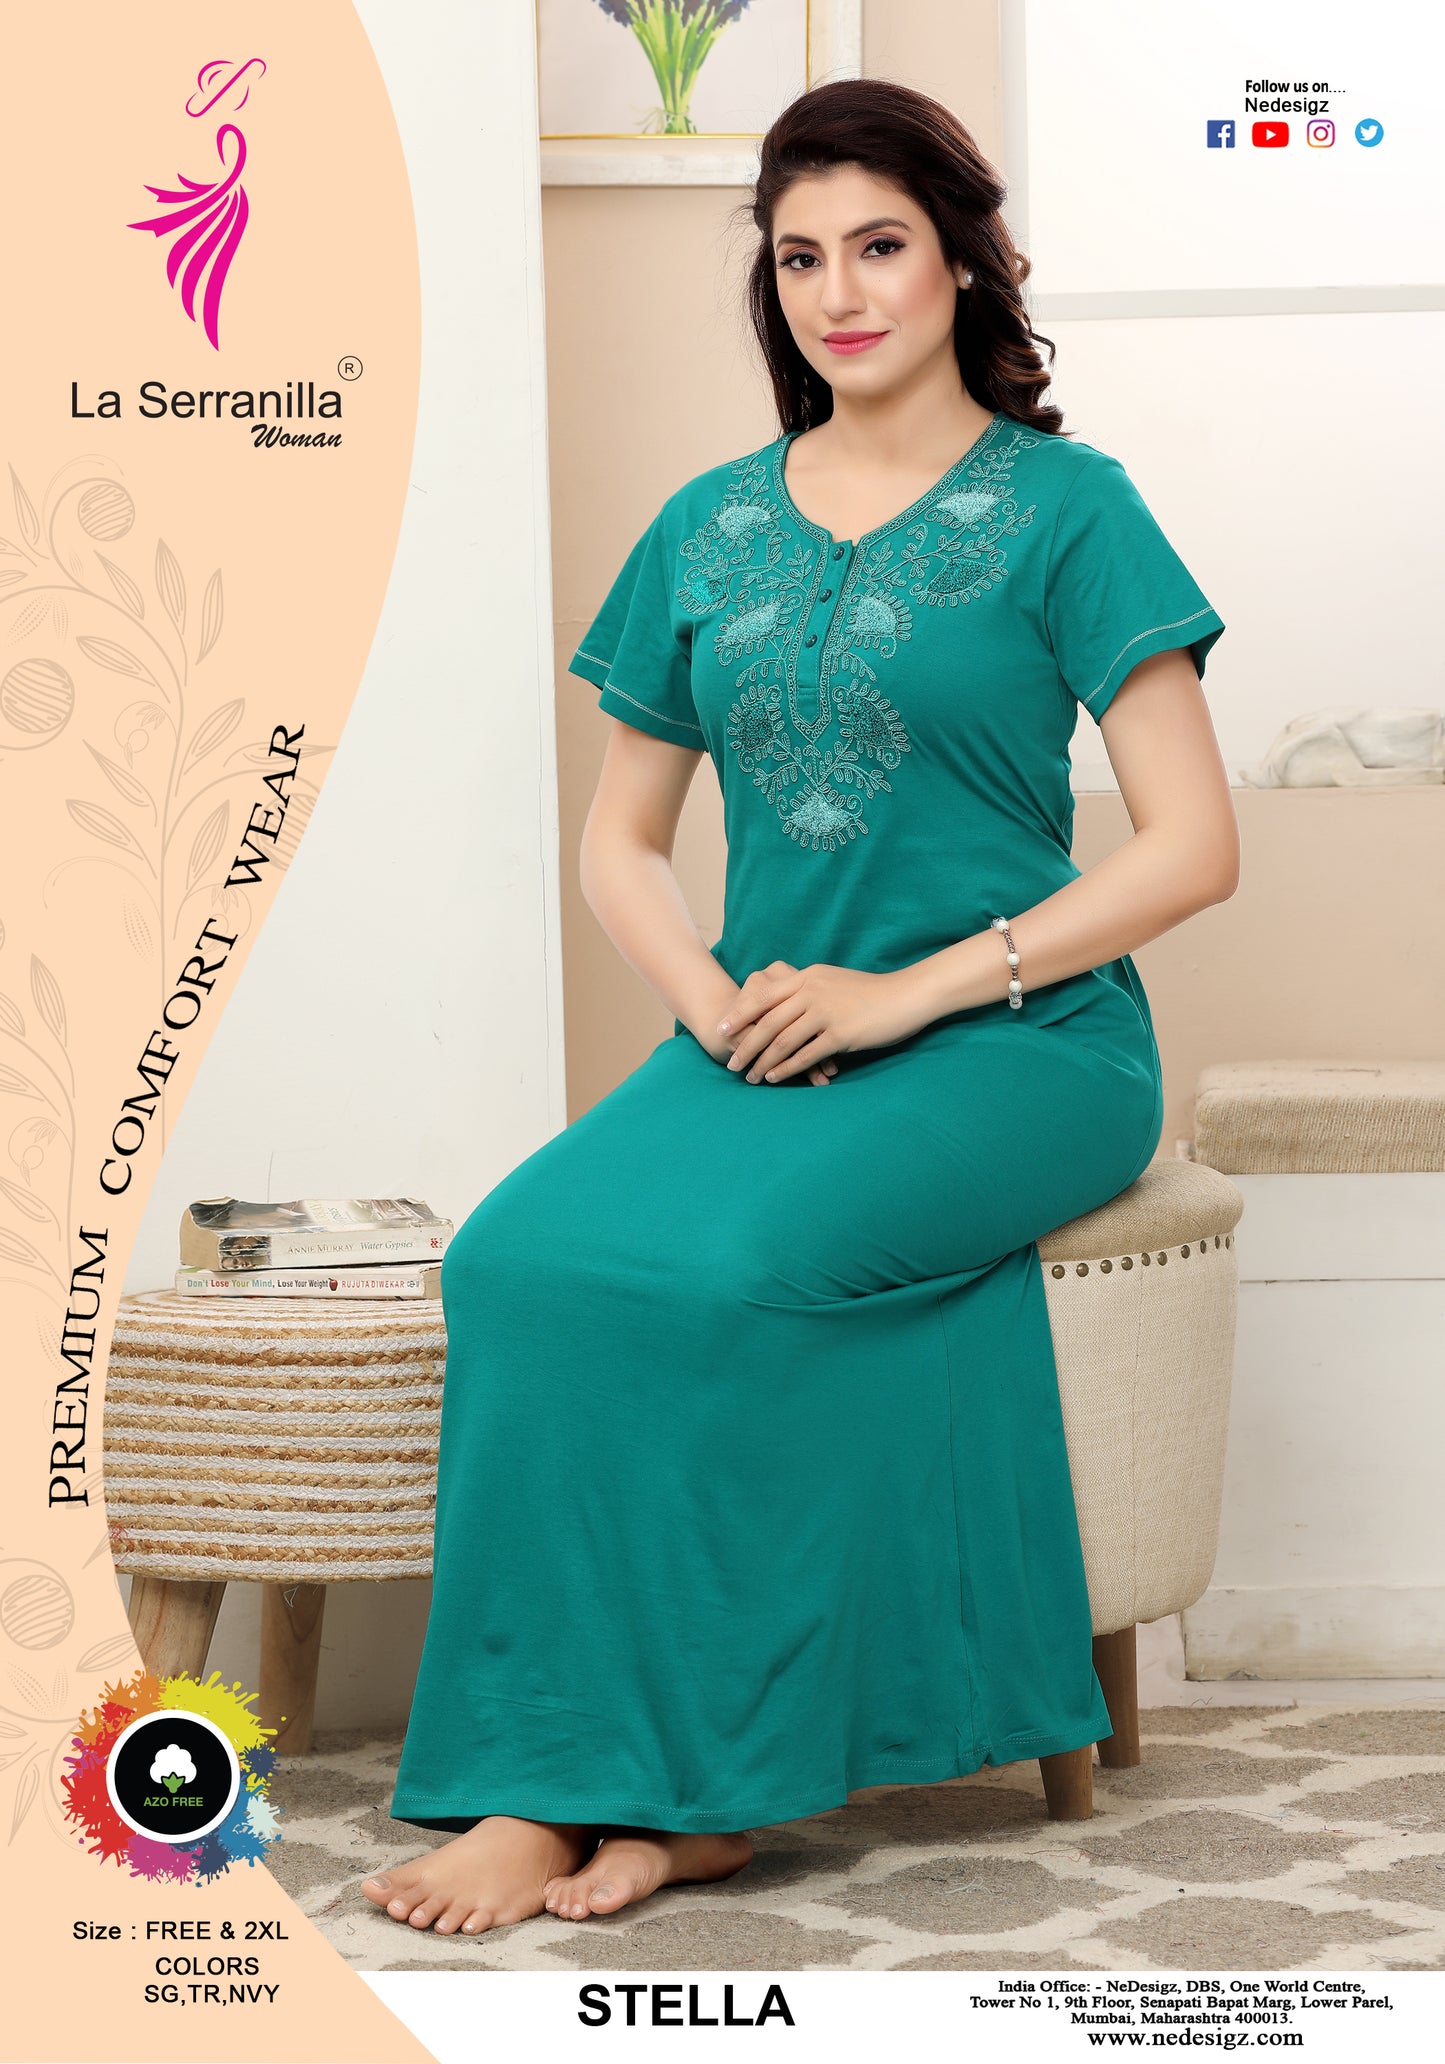 La Serranilla Women's Azo-Free Cotton Hosiery Nighty-NeDesigz.com